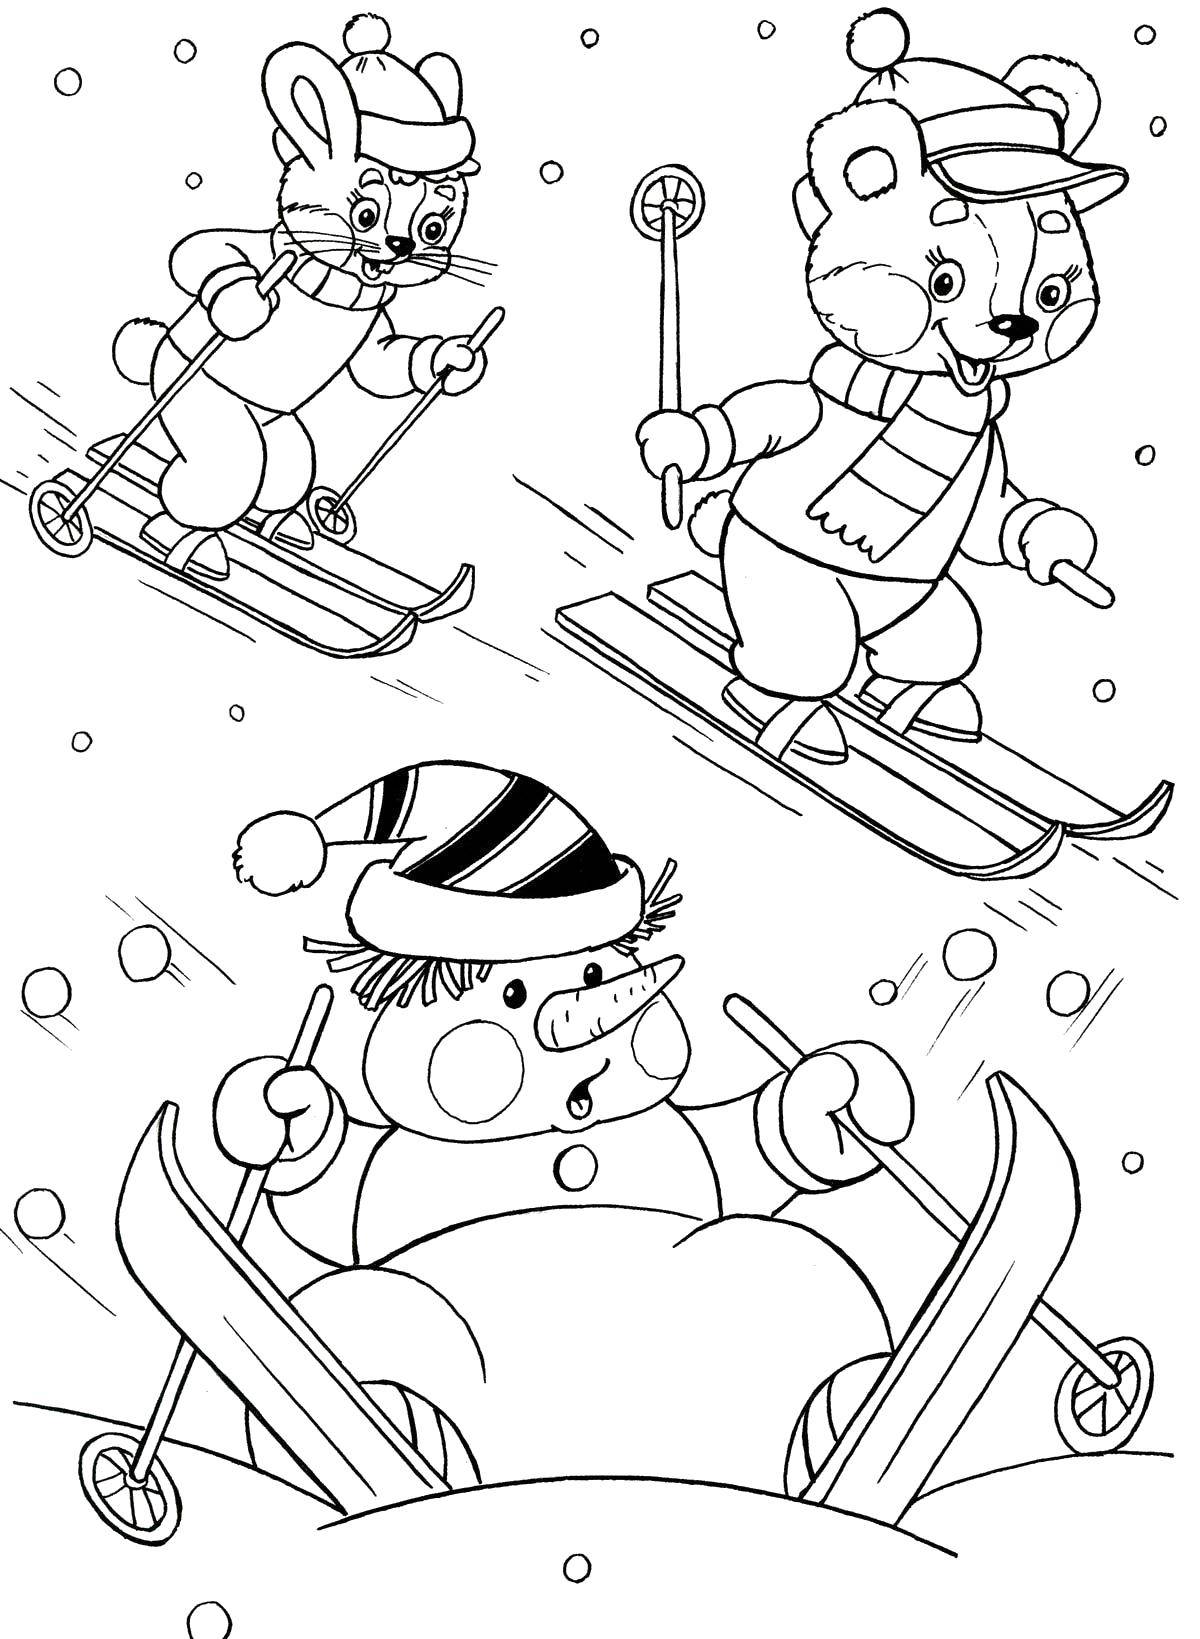 Coloring Bunny, bear and snowman skiing. Category winter. Tags:  Snowman, snow, winter, fun, skiing.